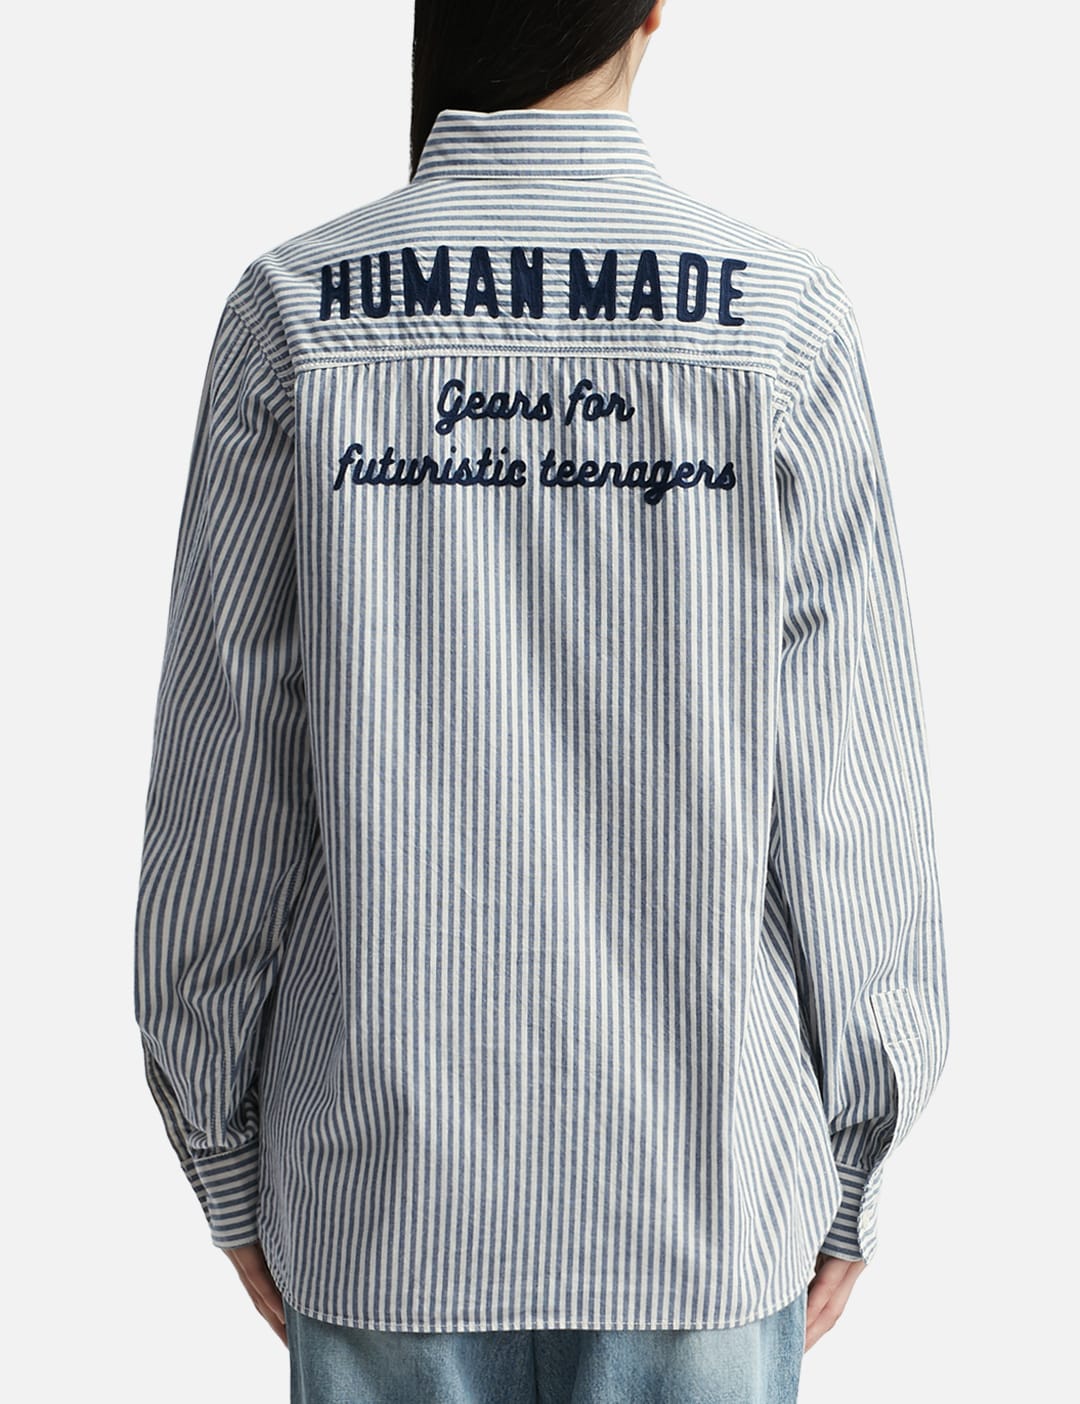 Human Made - Striped Work Shirt | HBX - Globally Curated Fashion 